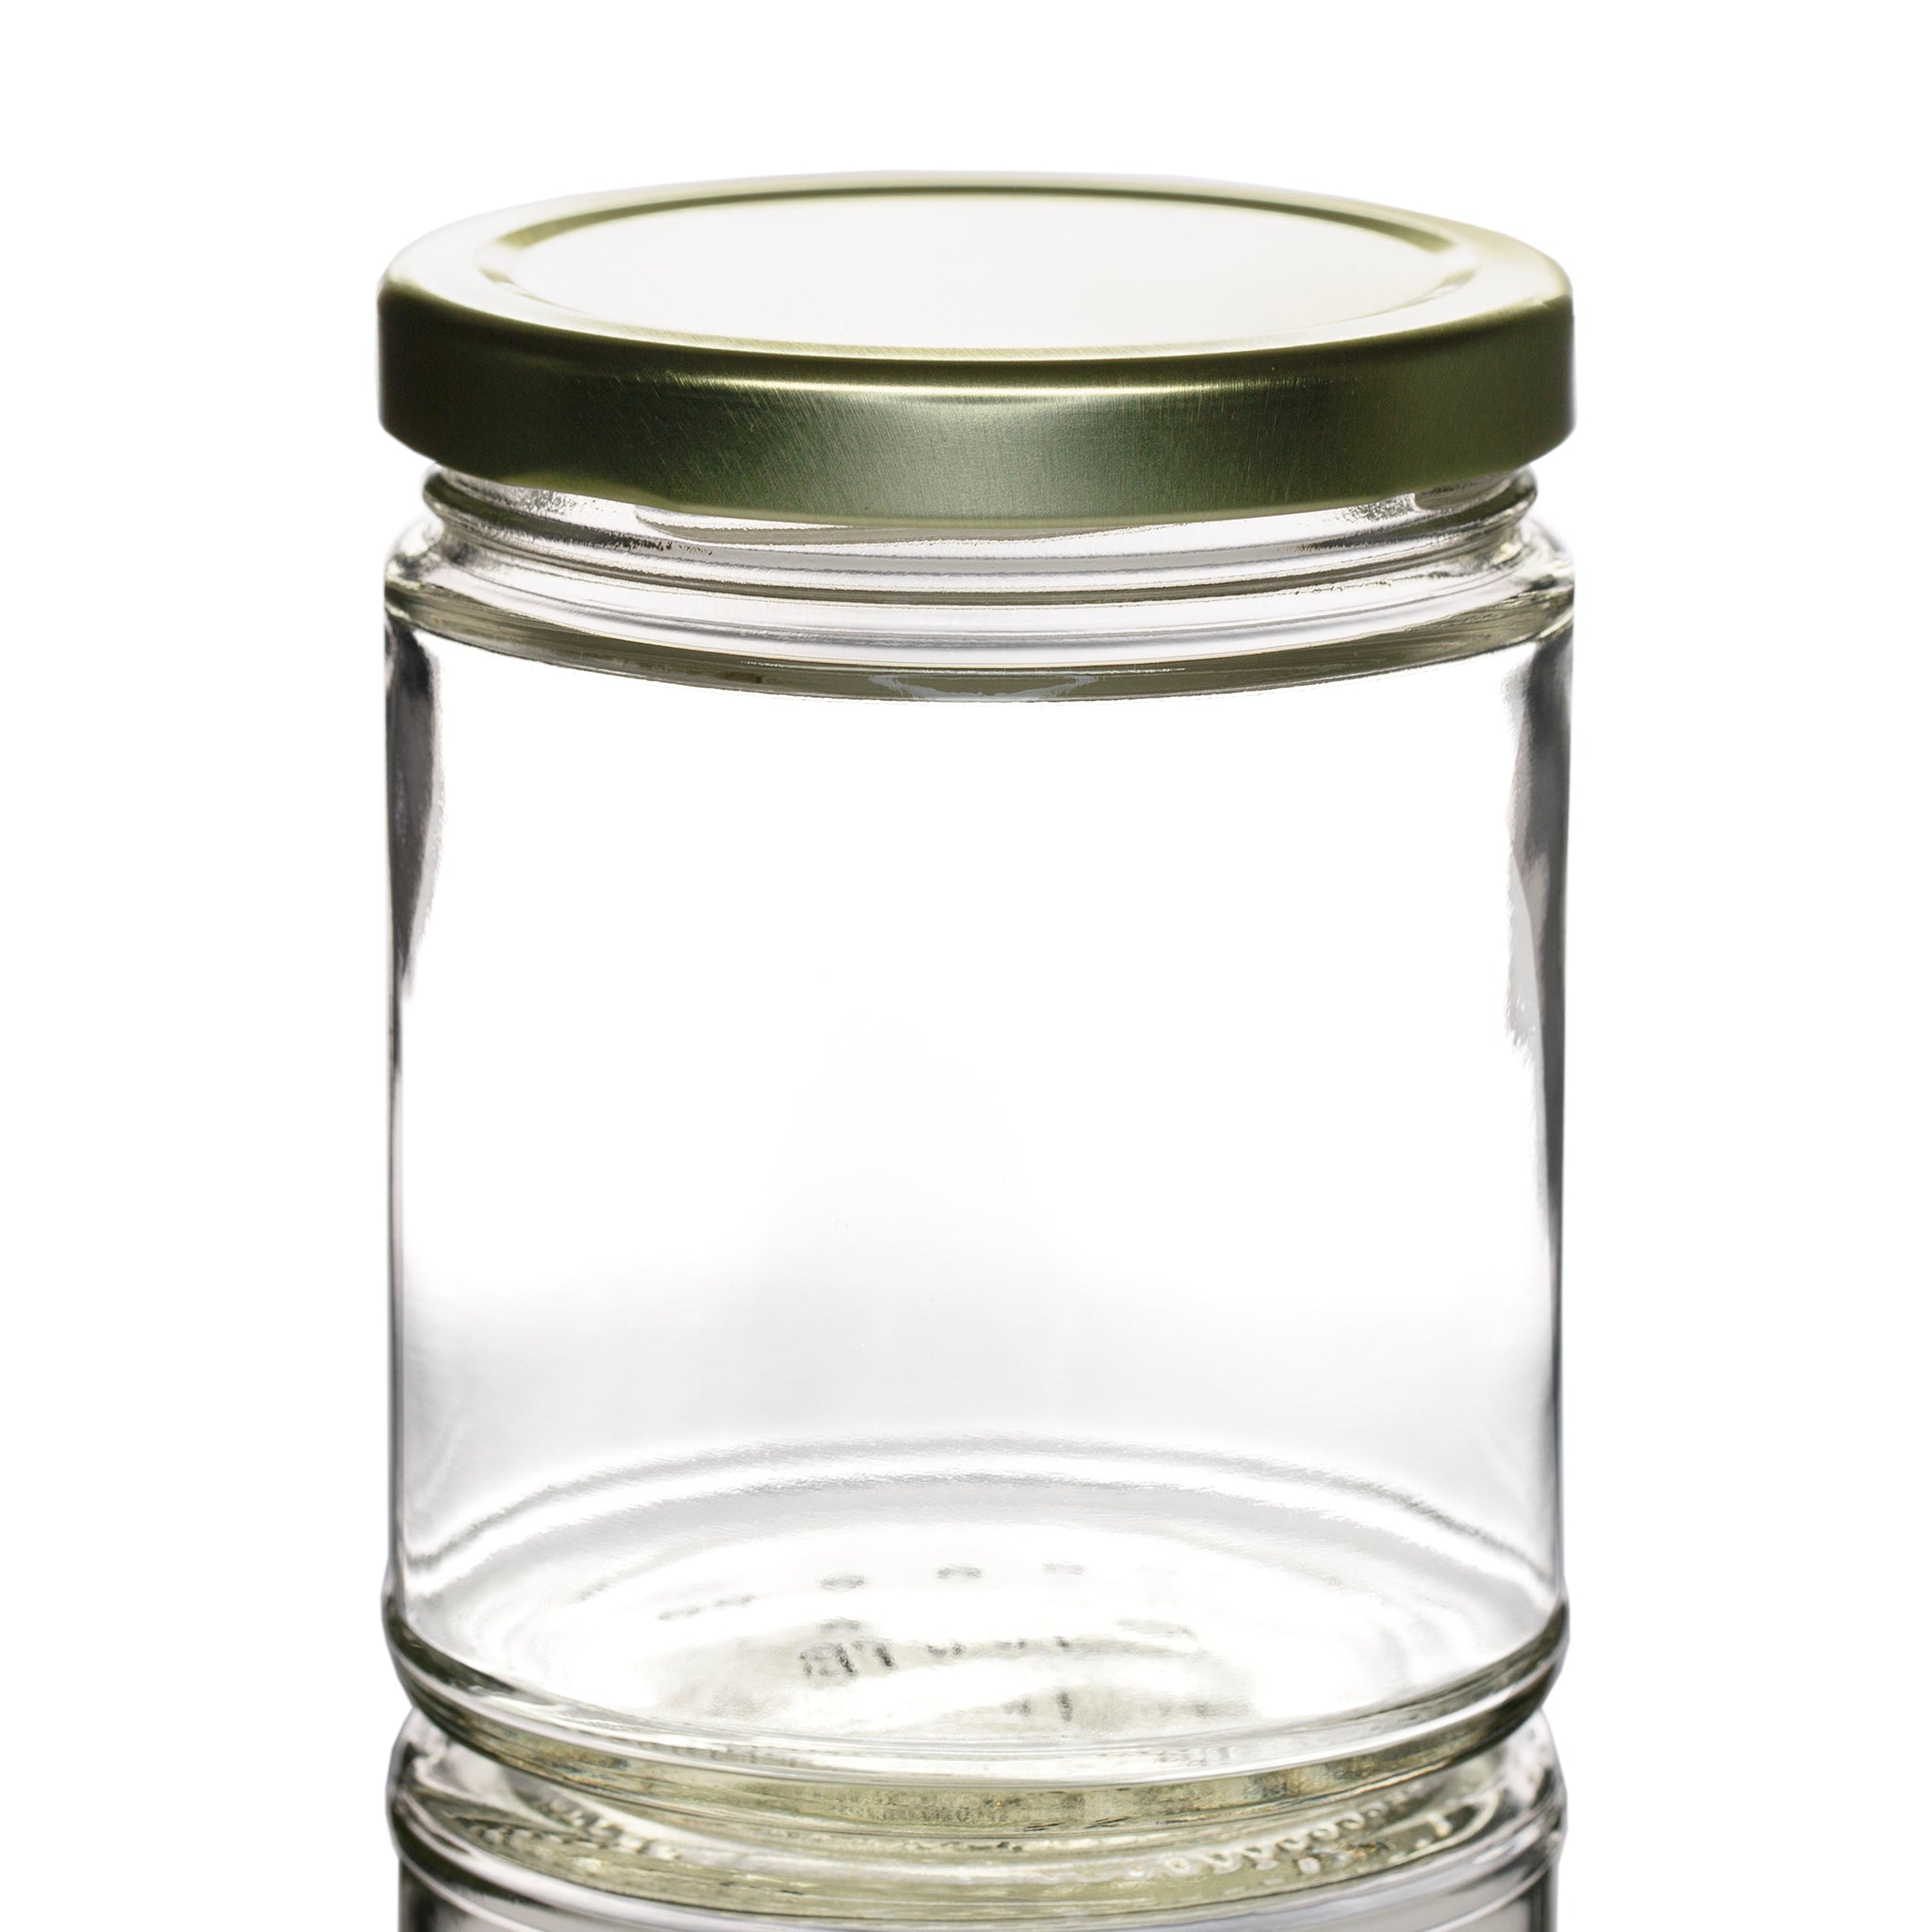 12 oz Clear Glass Jar 70-2035 Lug Neck Finish, Round Base